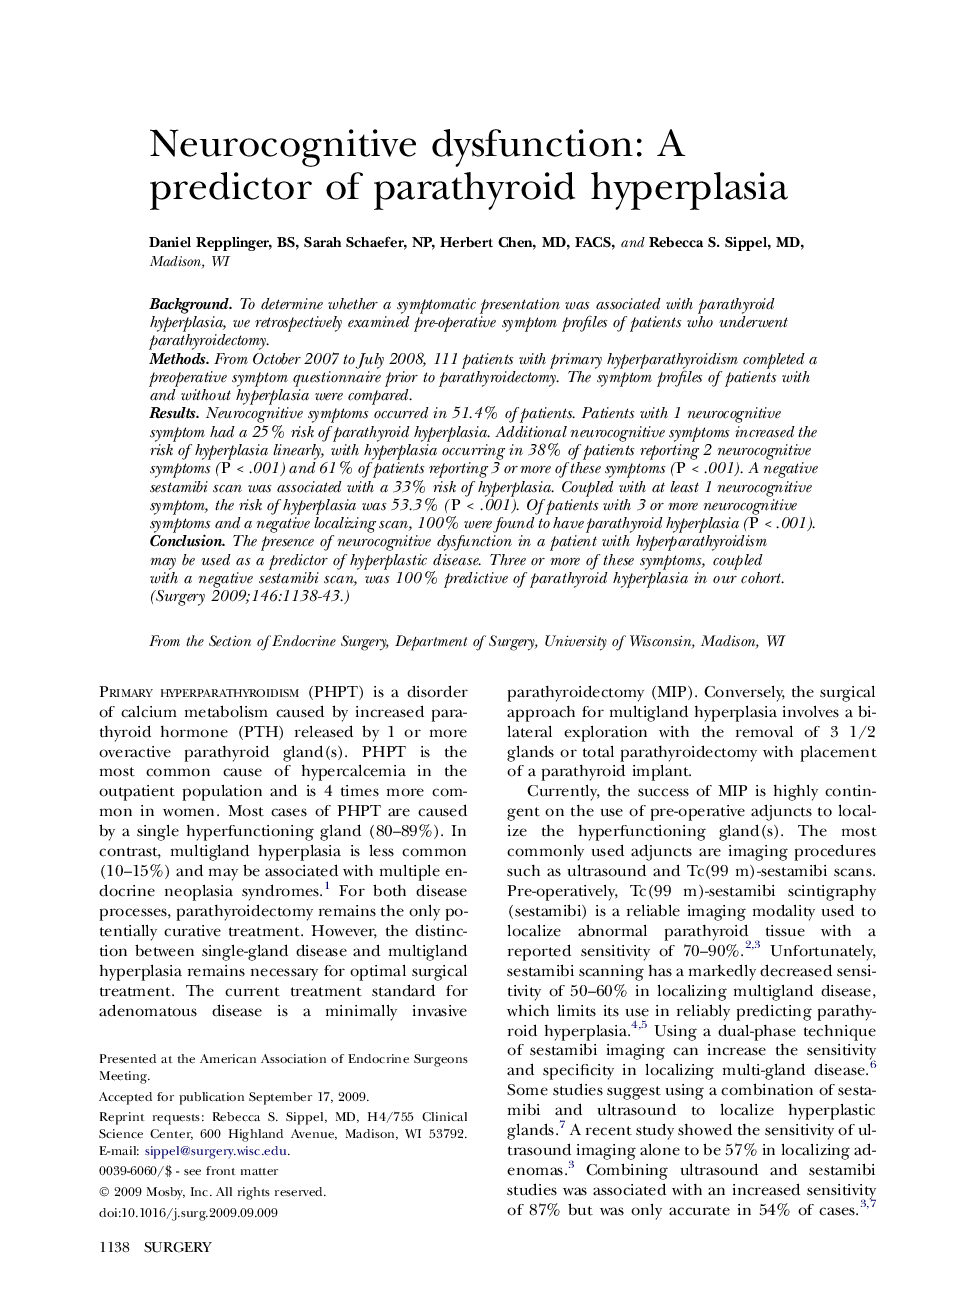 Neurocognitive dysfunction: A predictor of parathyroid hyperplasia 